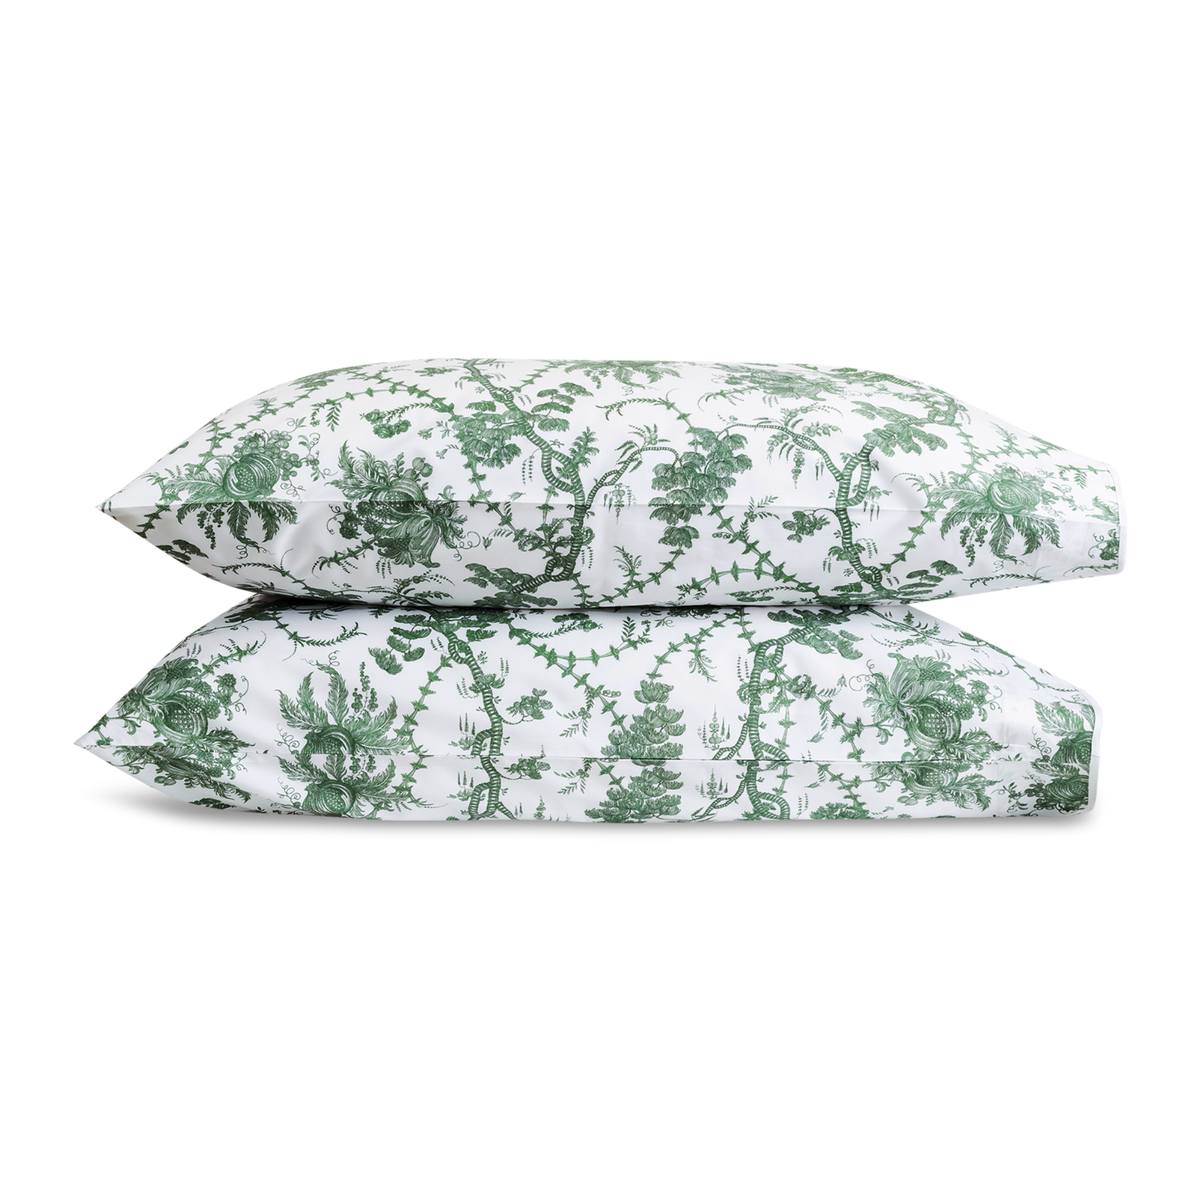 Pair of Pillowcases of Matouk Schumacher San Cristobal Bedding in Green Color